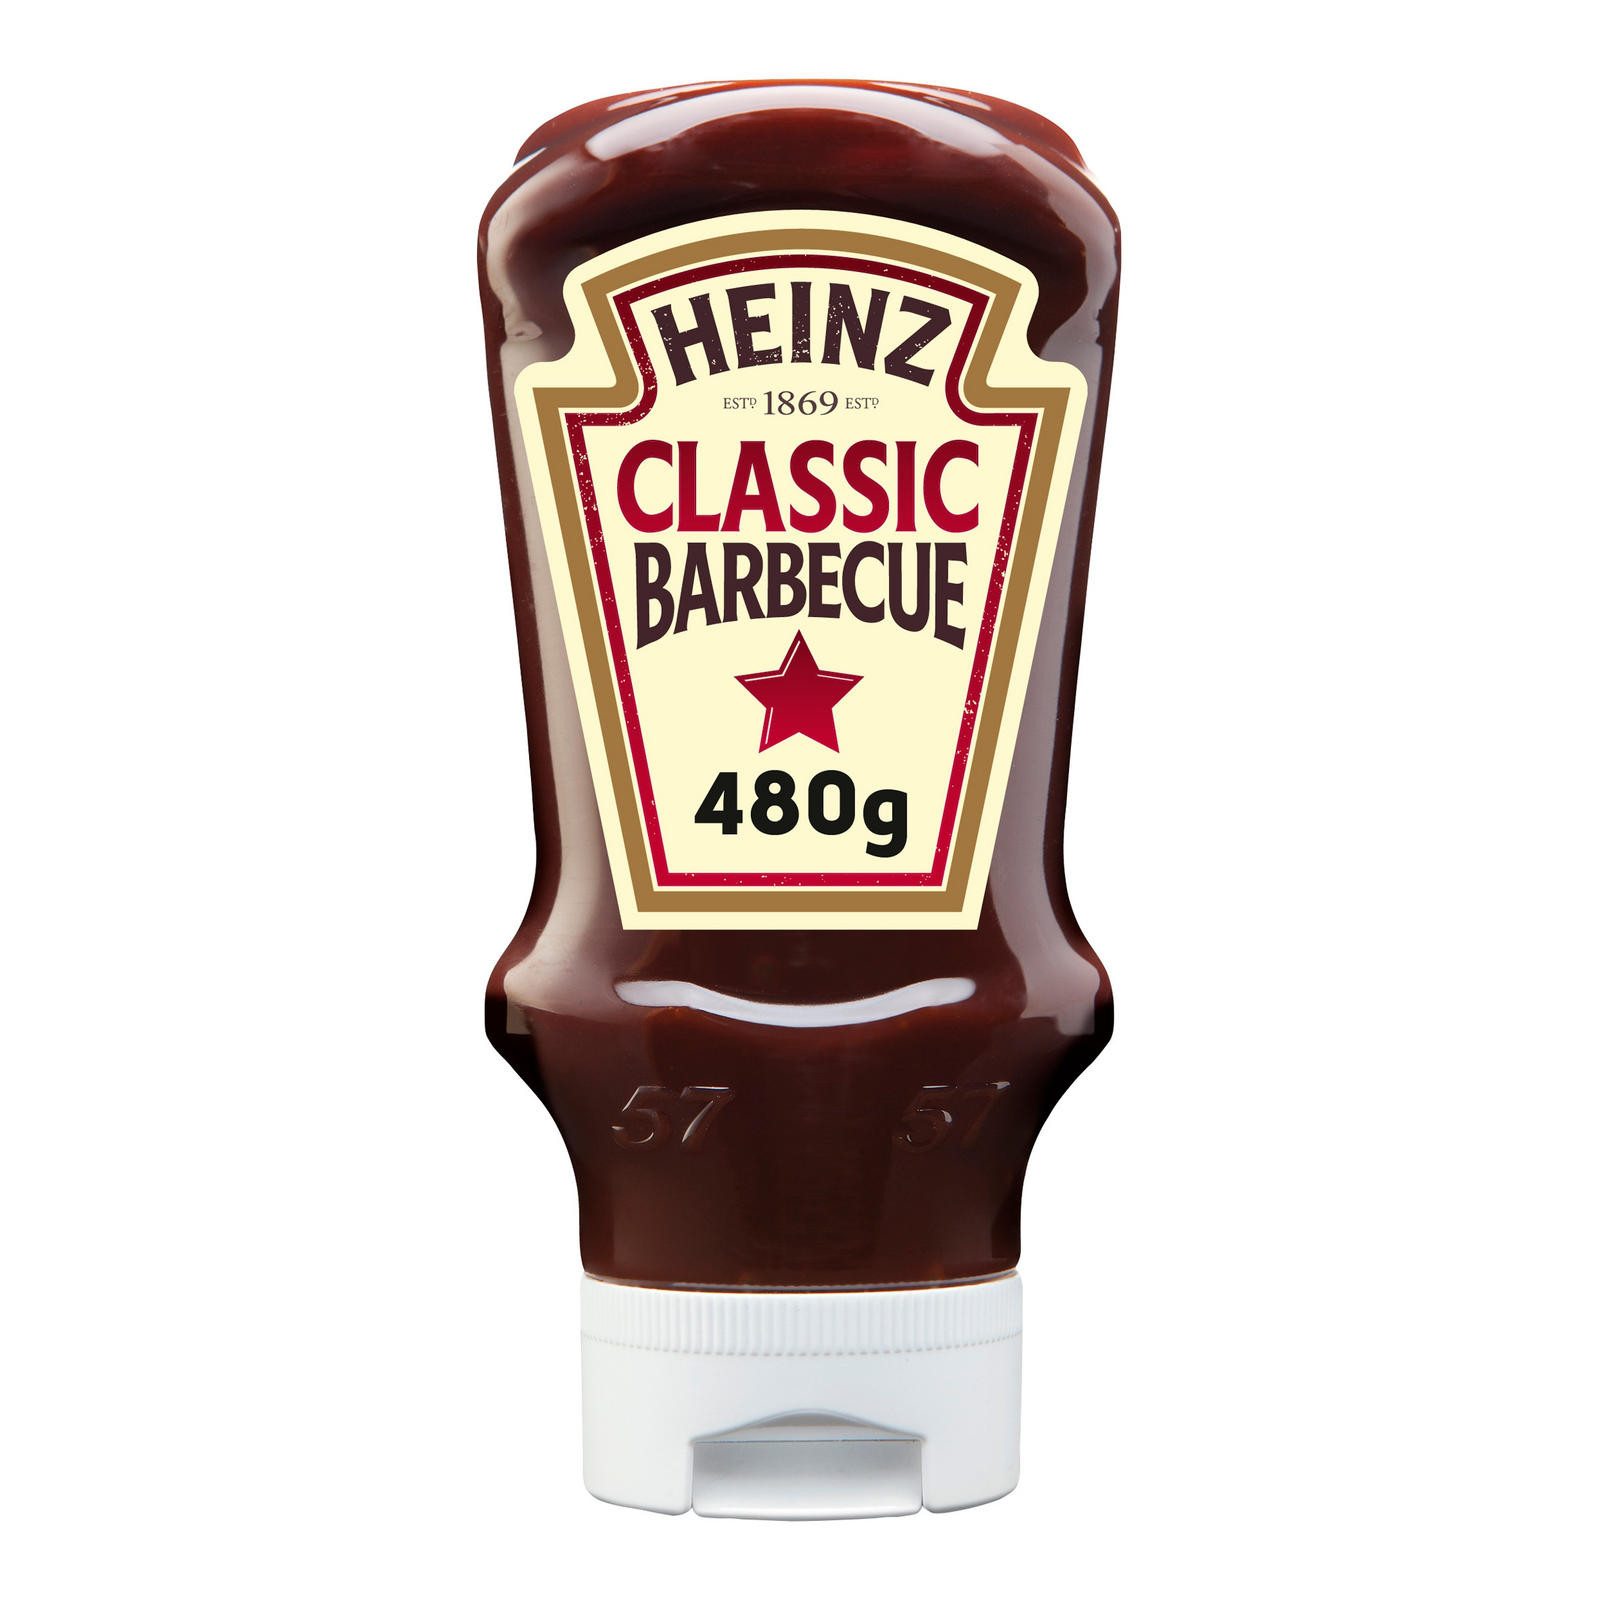 Heinz Bbq Sauce Ingredients Luxury Heinz Classic Barbecue Sauce 480g Table Sauce